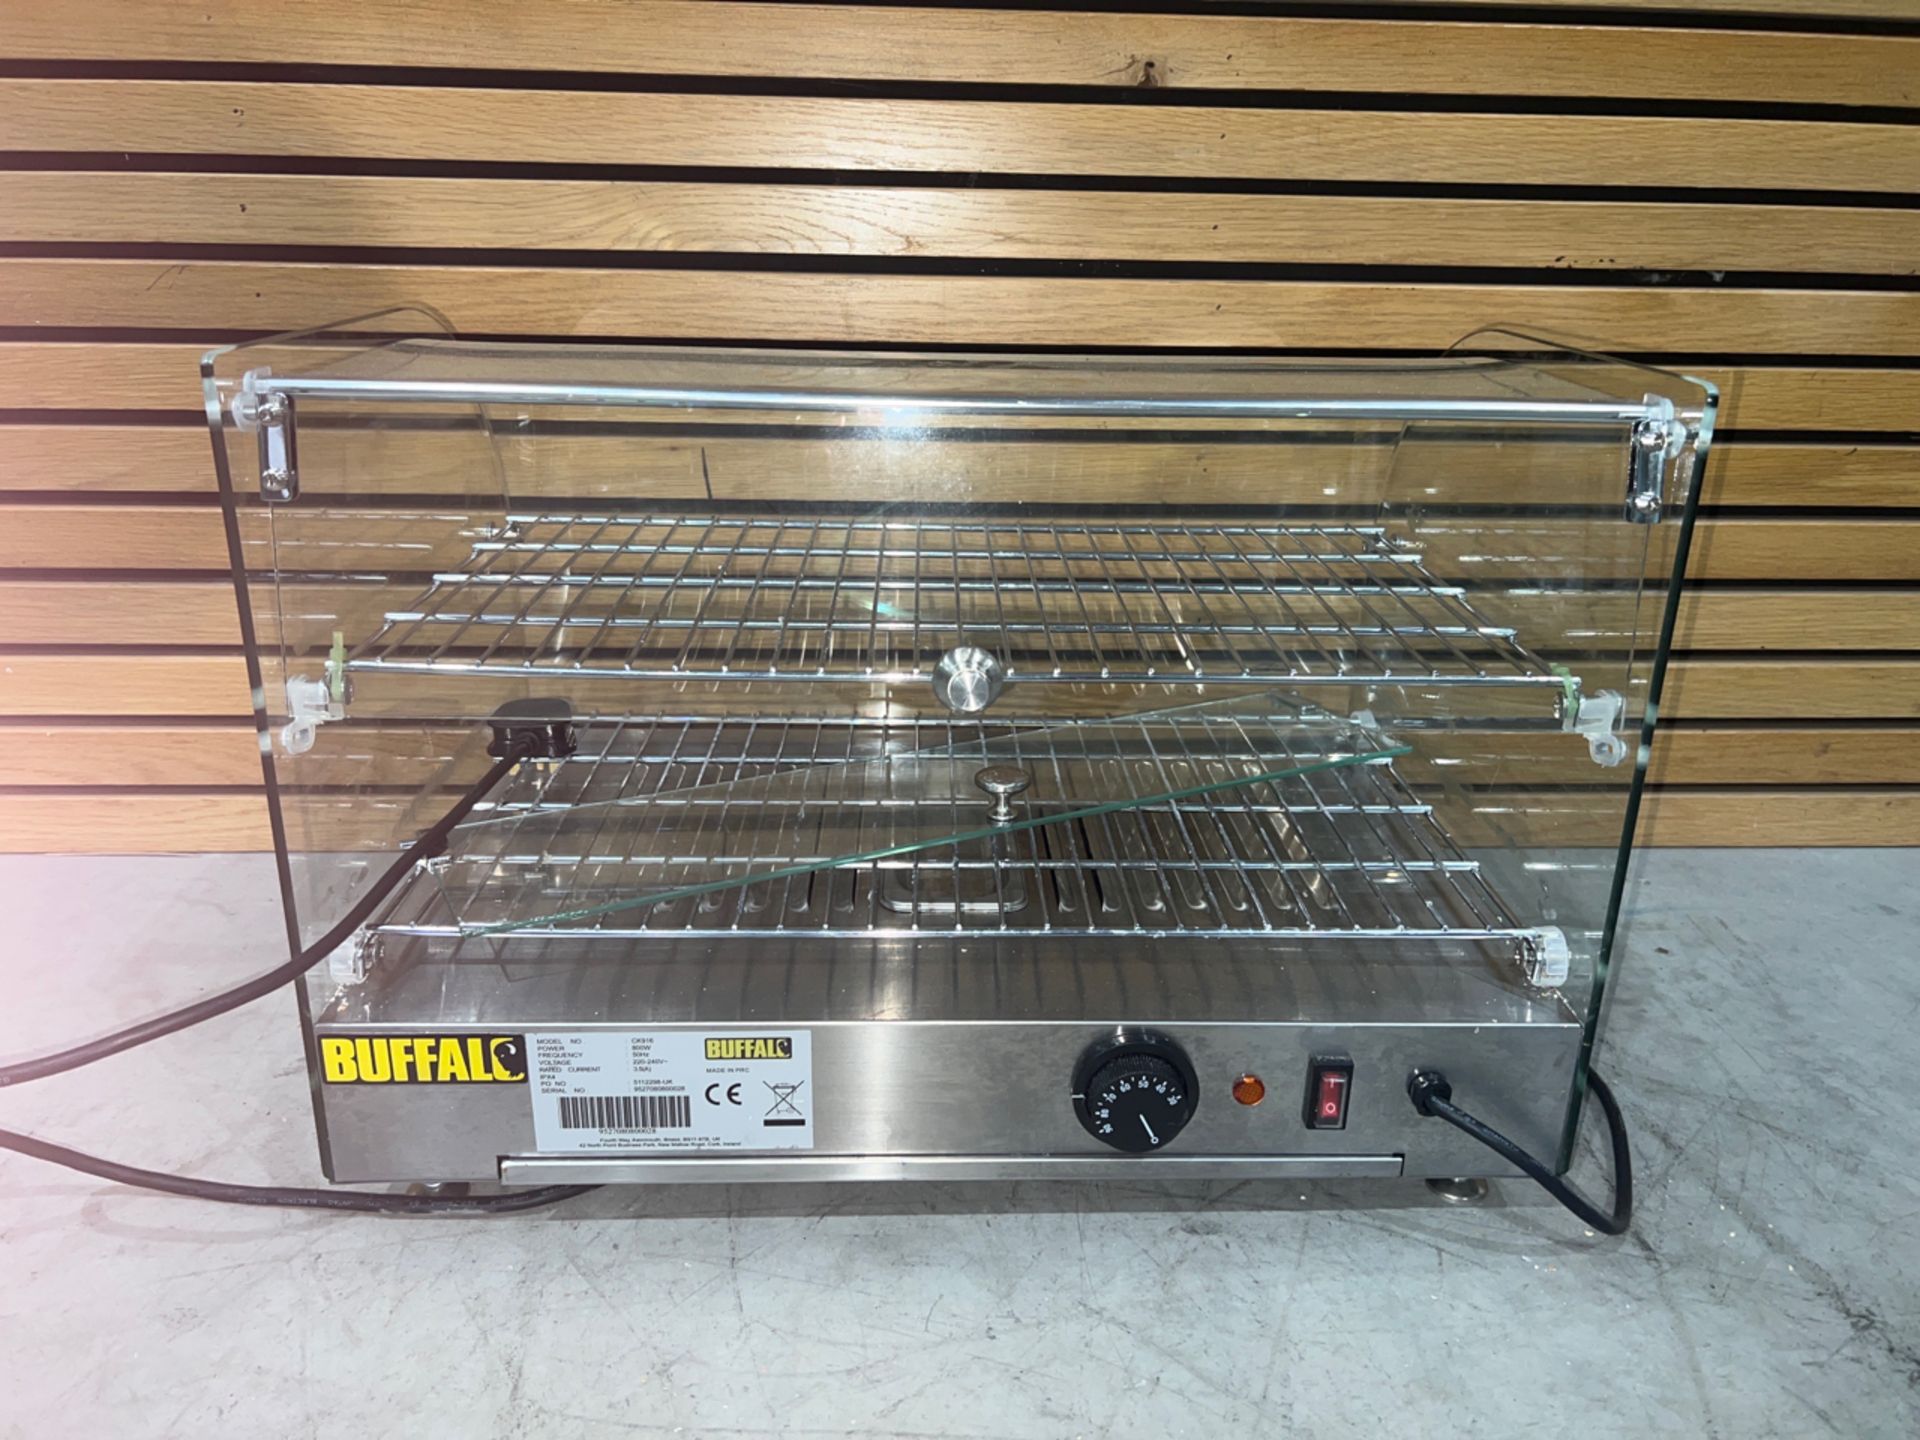 Buffalo CK916 Countertop Heated Food Display - Image 3 of 4